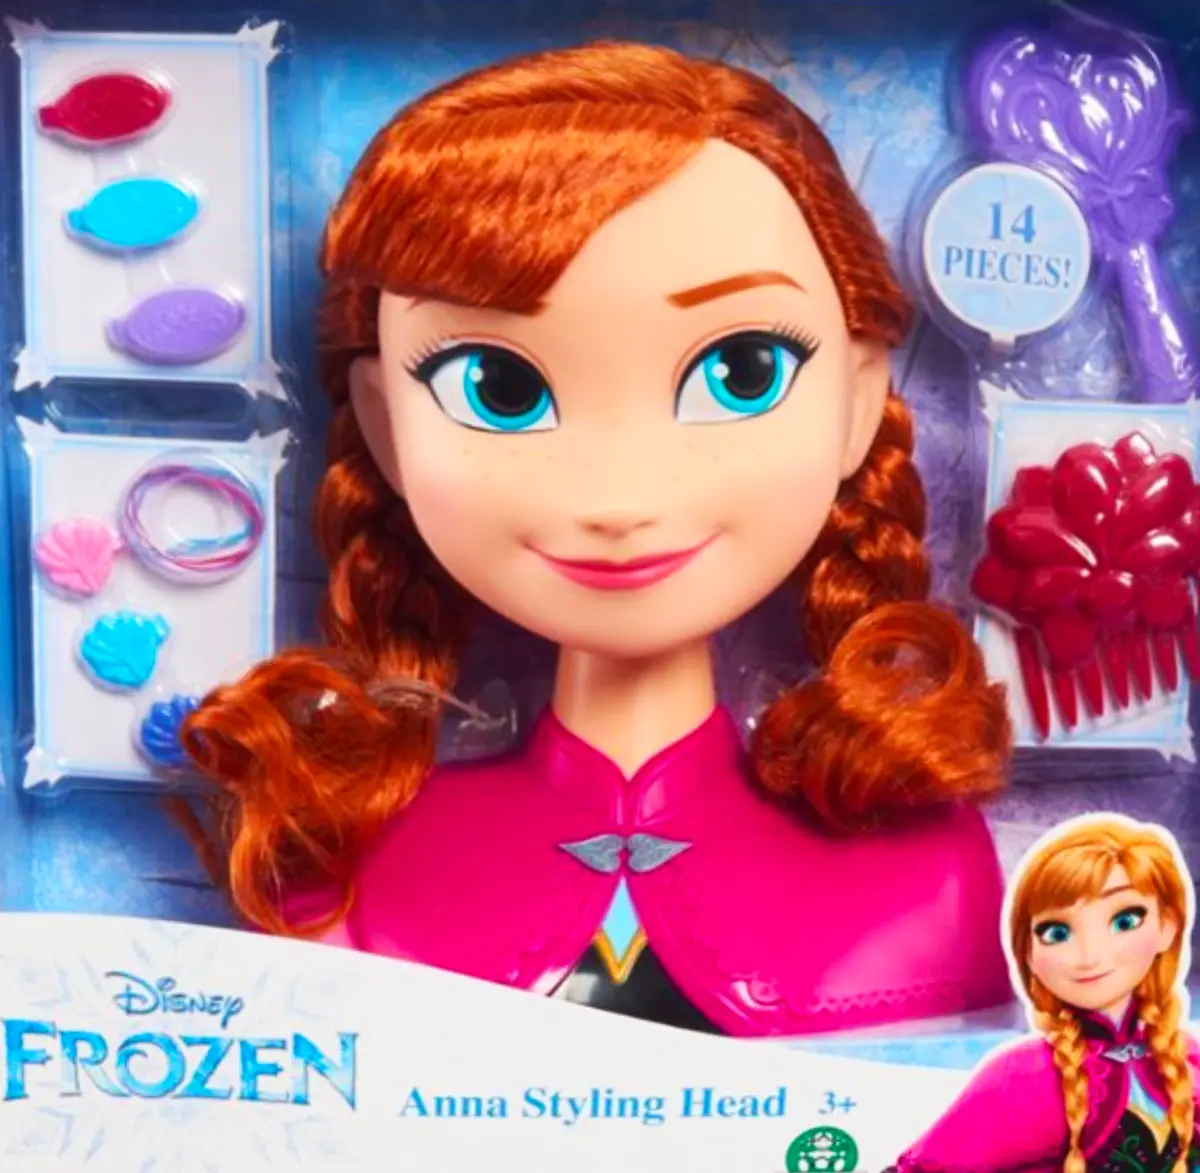 bruce glazier recommends Disneys Frozen 2 Anna Styling Head